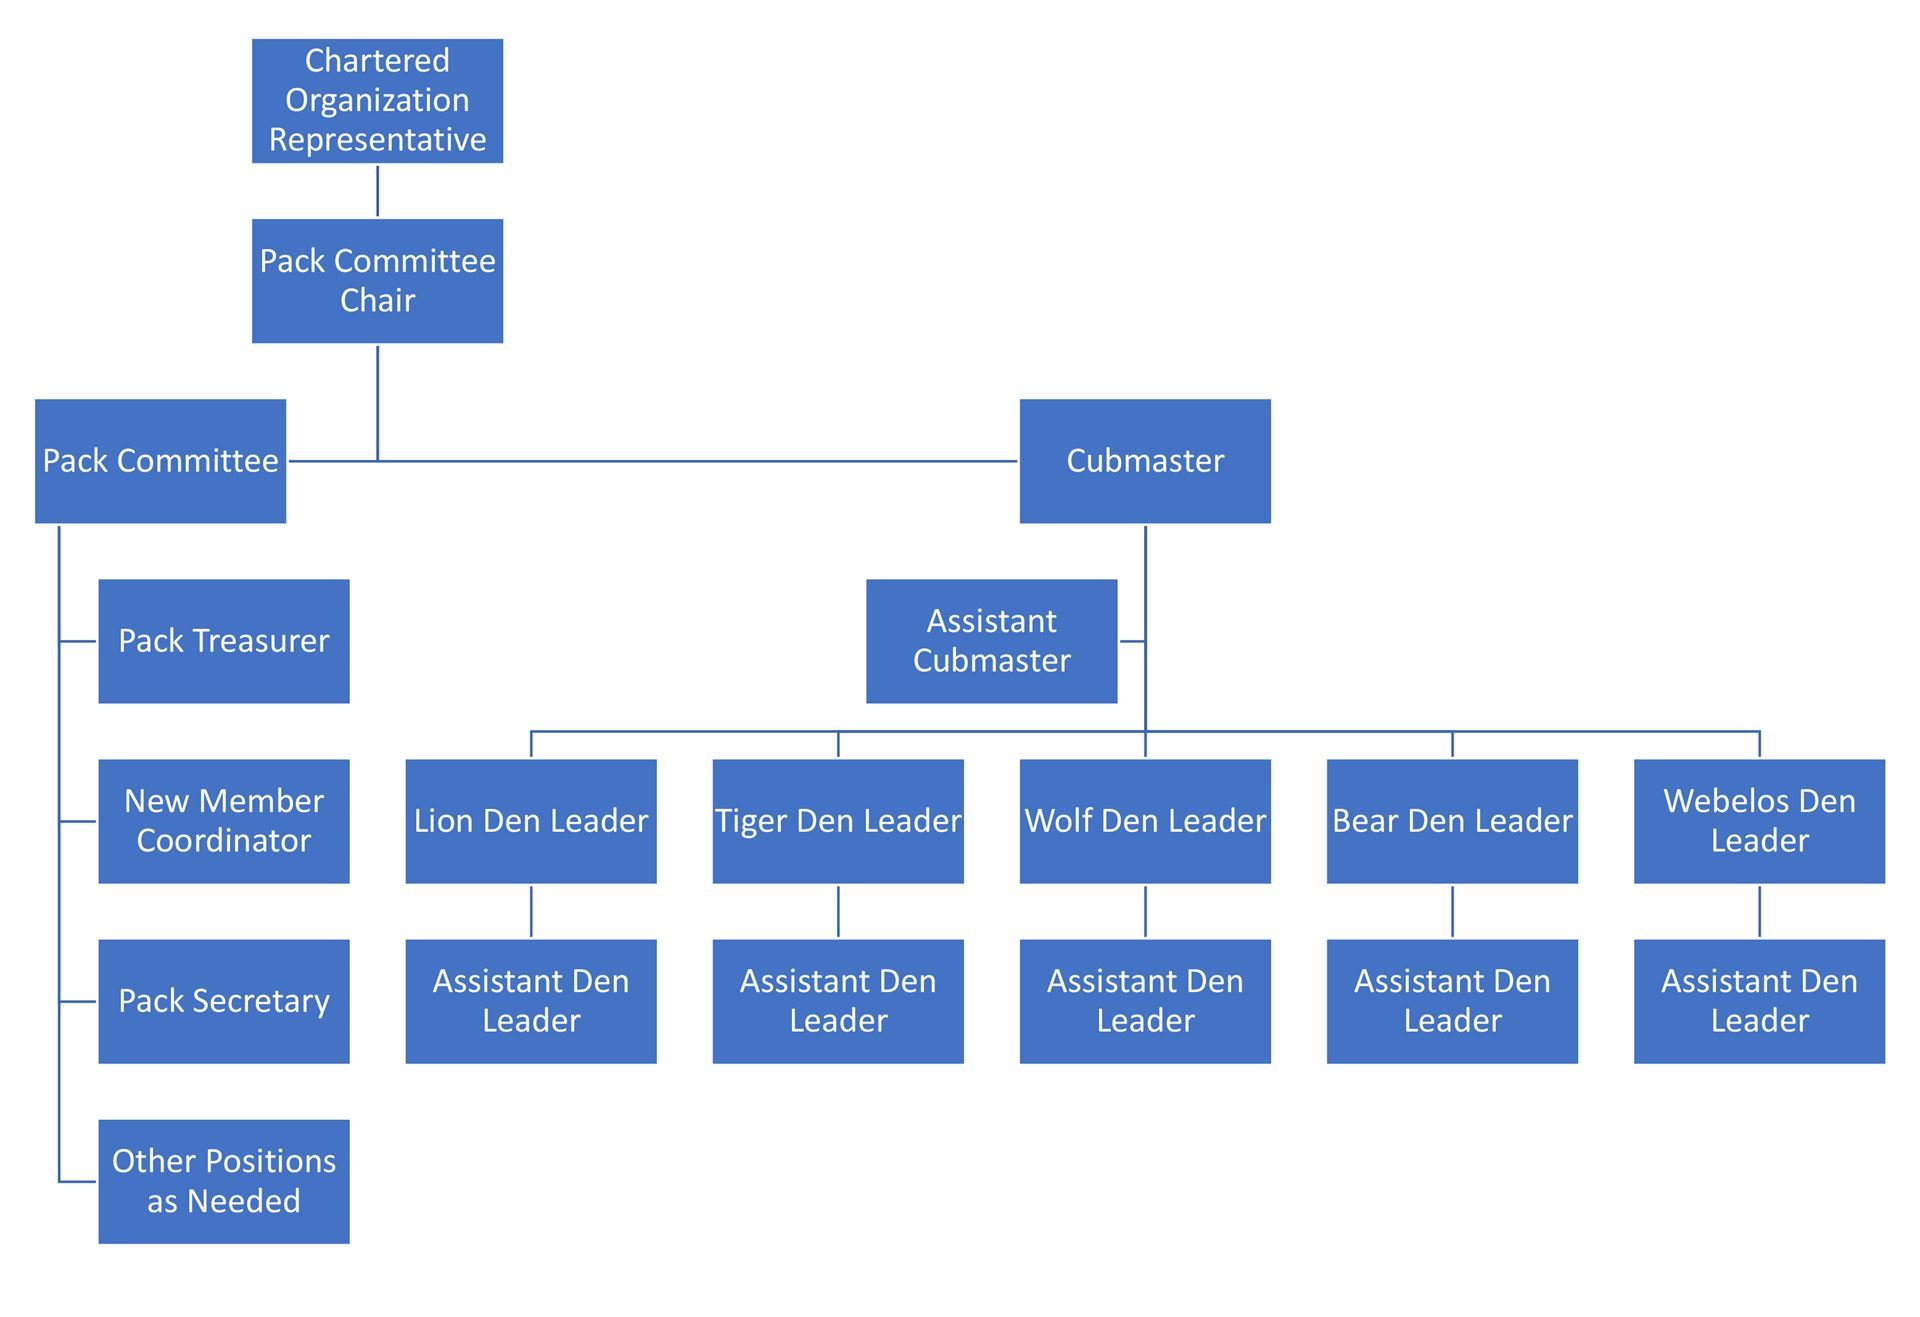 Bsa Troop Committee Organization Chart